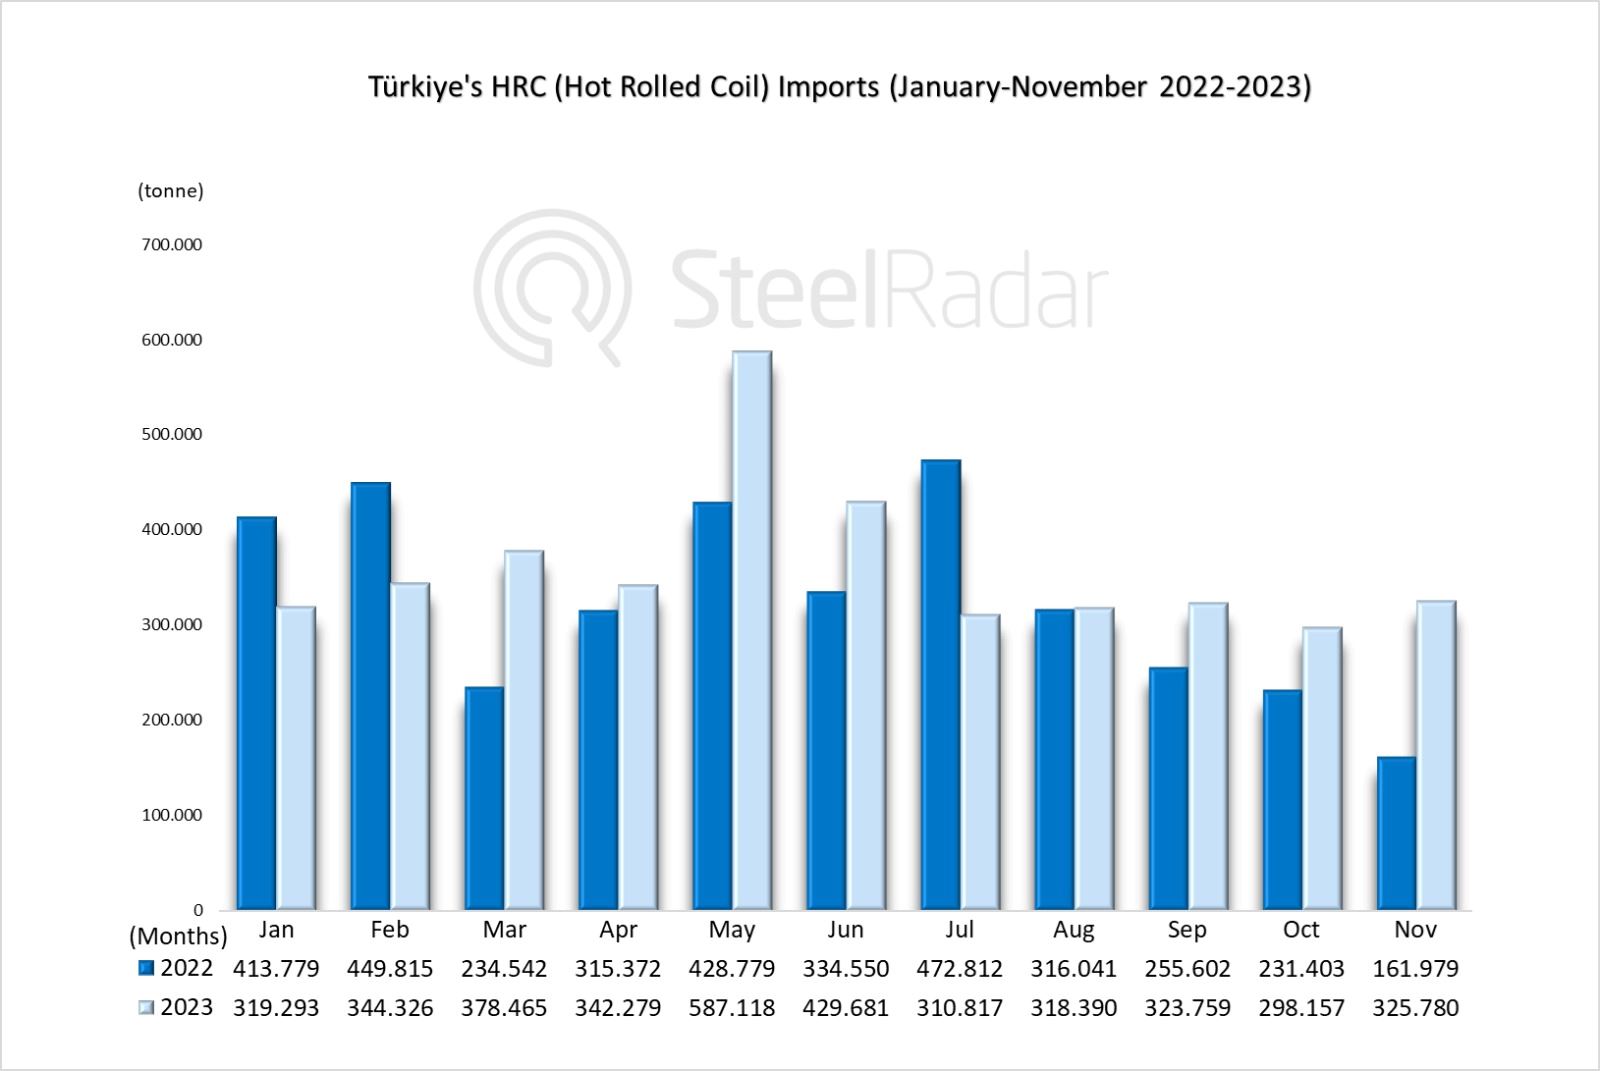 Türkiye's HRC imports increased by 10.05% in January-November period